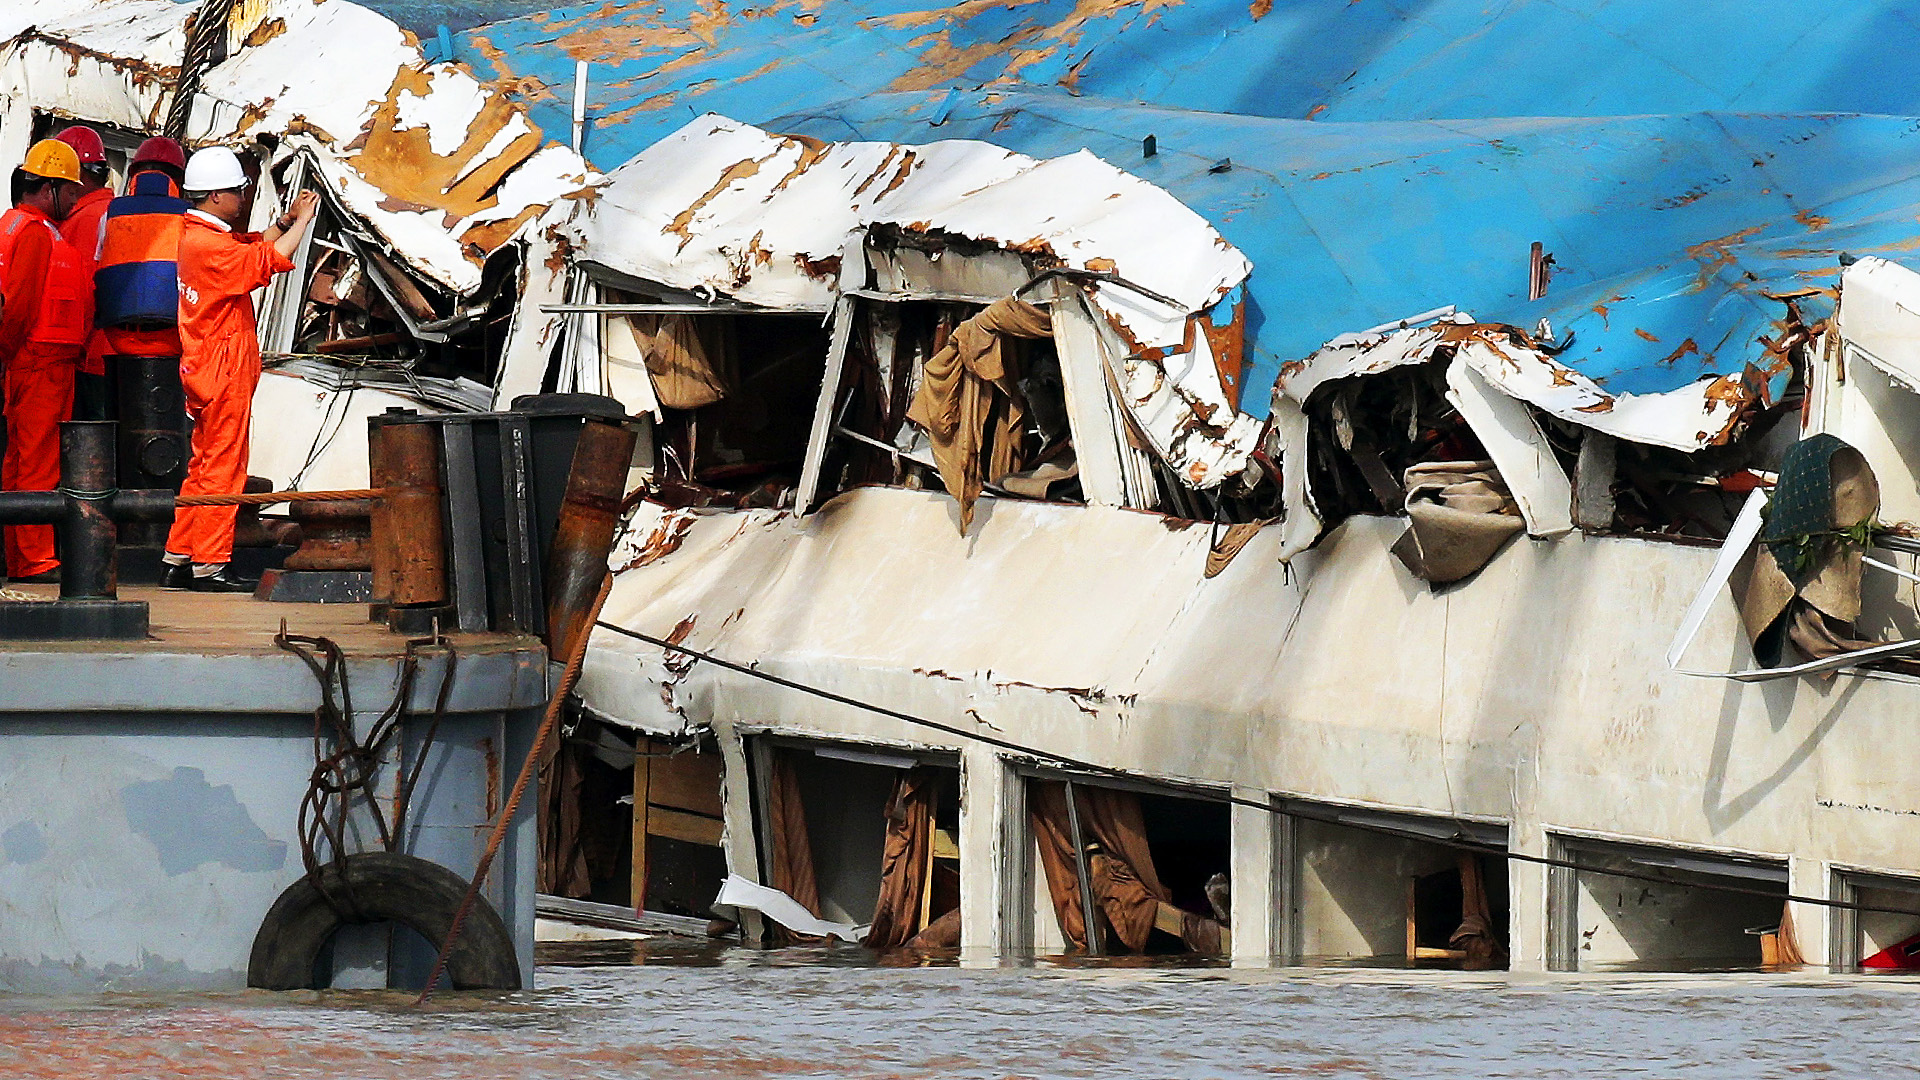 Hoists lift the capsized cruise ship in the Yangtze River. Photo: Reuters